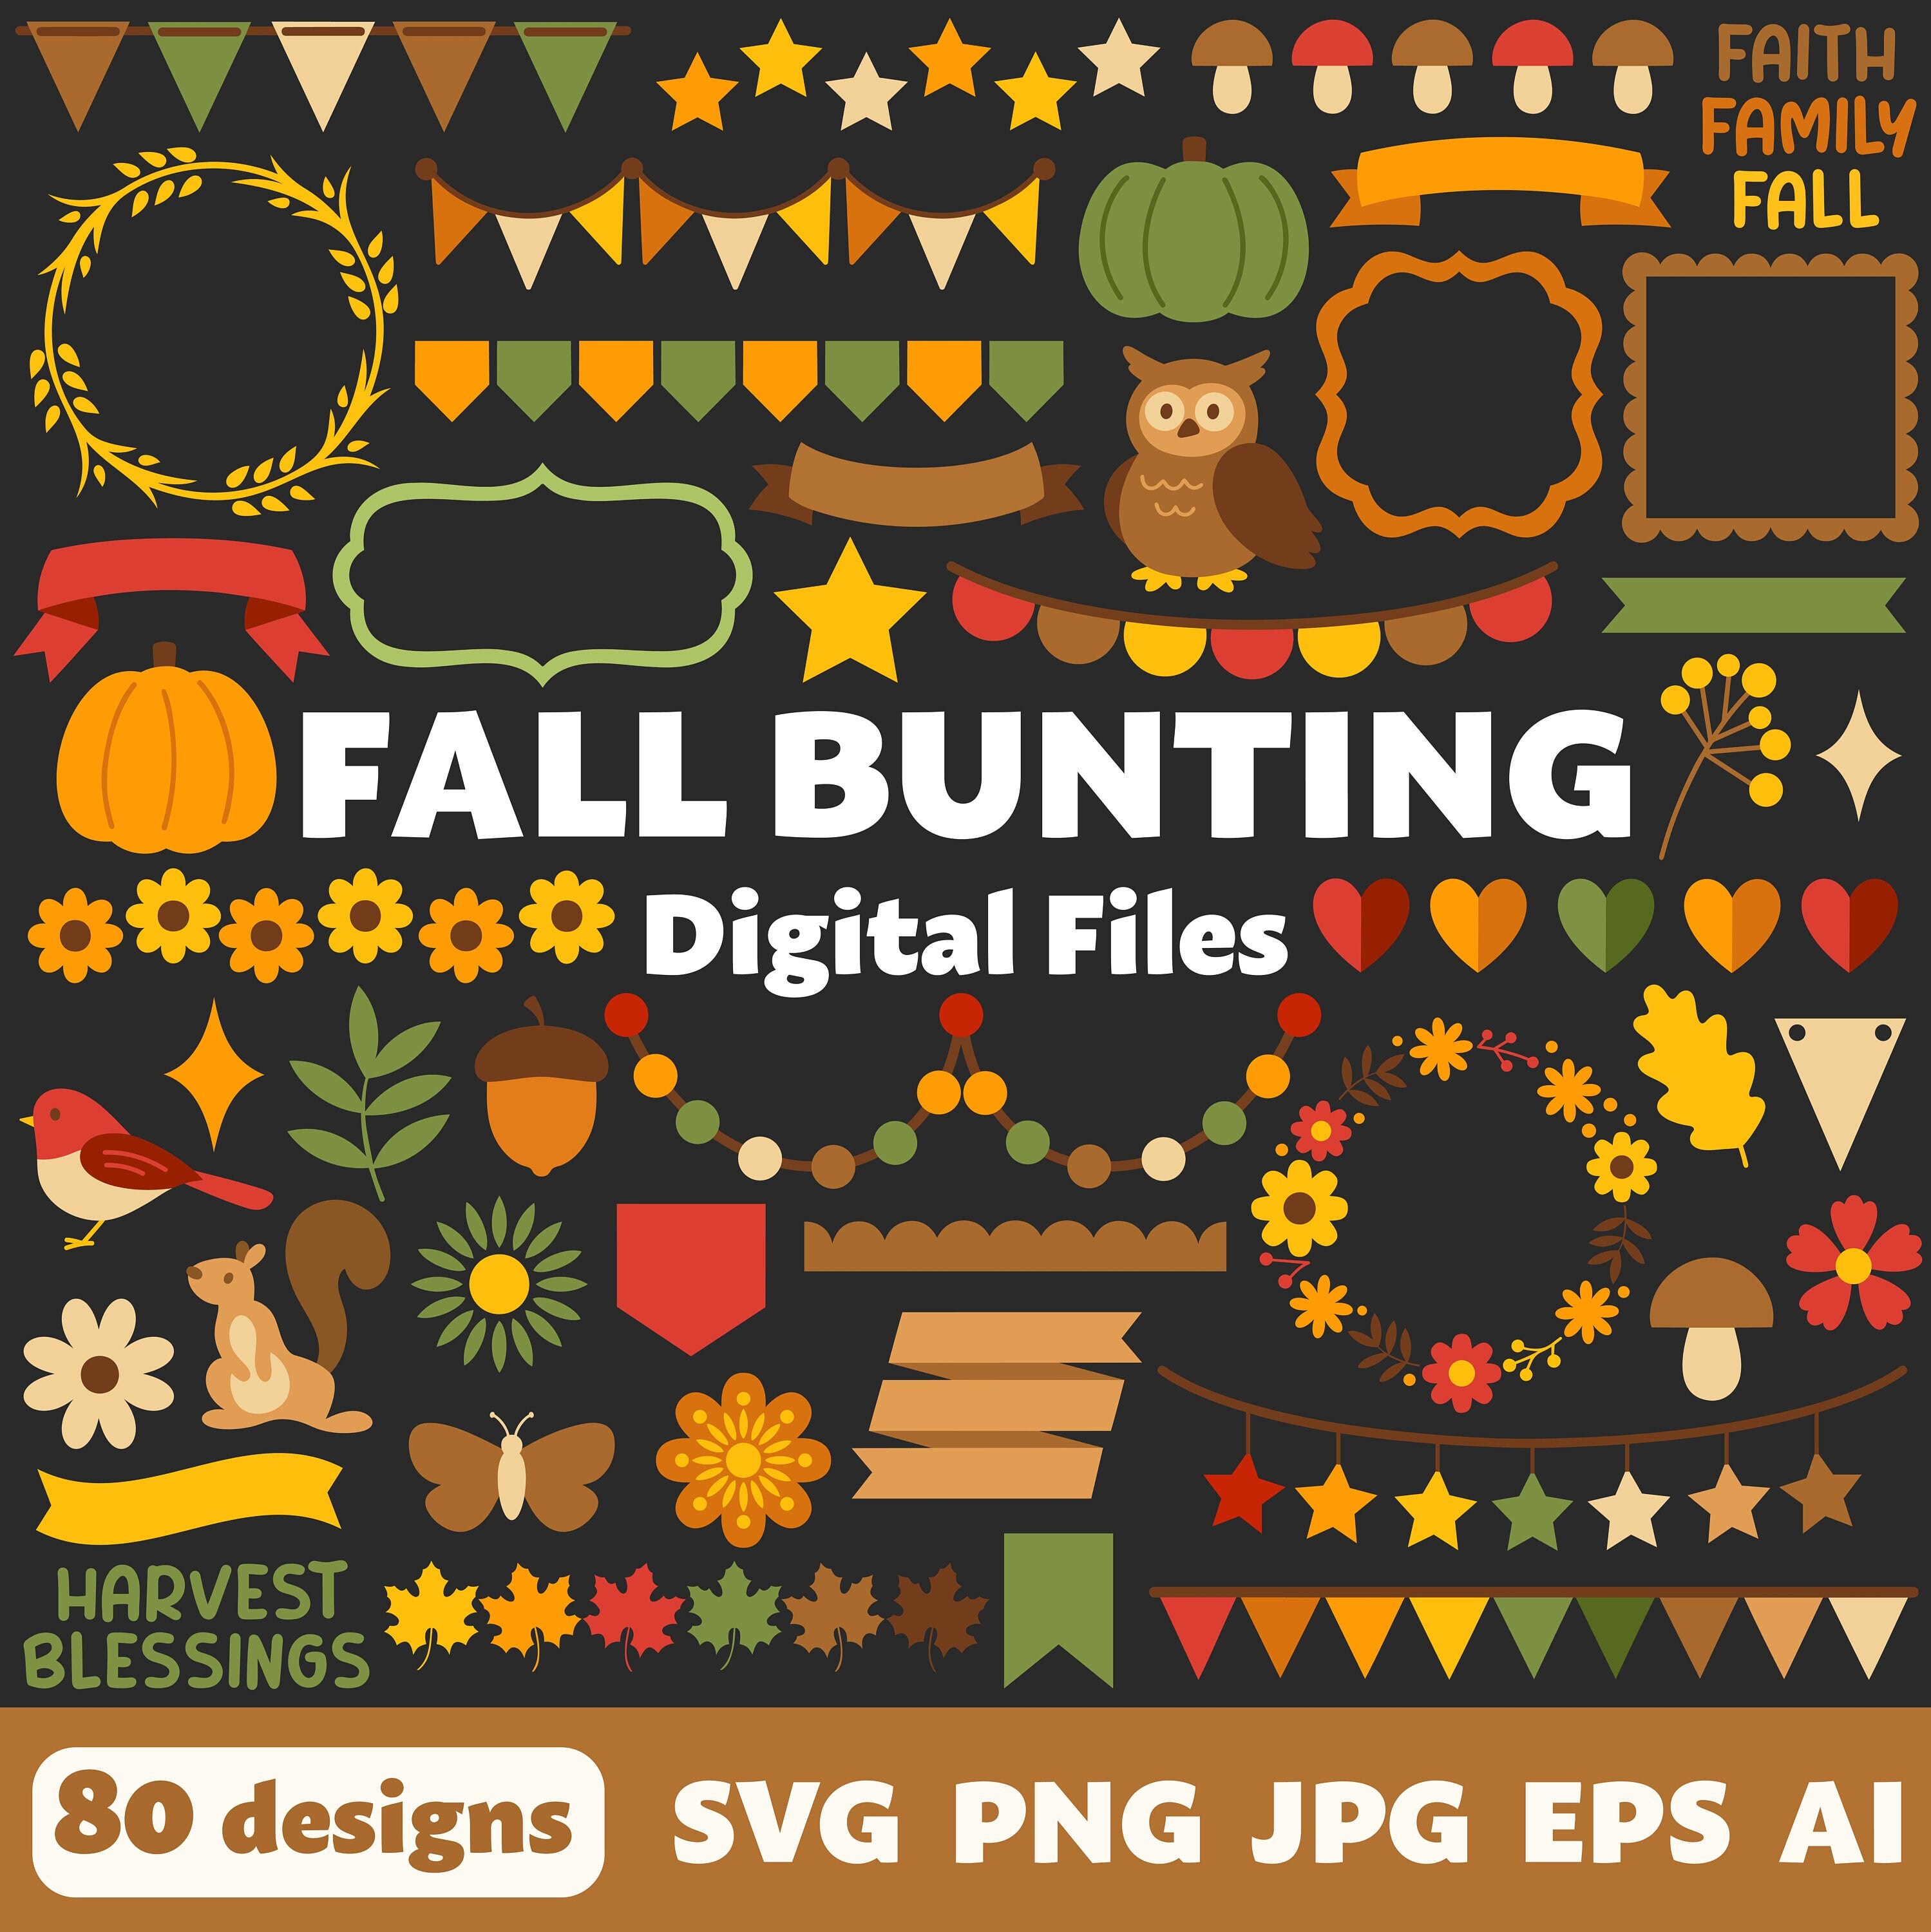 Fall Bunting Digital Files, SVG PNG JPG, Clipart, Cut Files, Cricut, Autumn, Banners, Ribbons, Wreath, Flowers, Labels, Frames, Scrapbooking